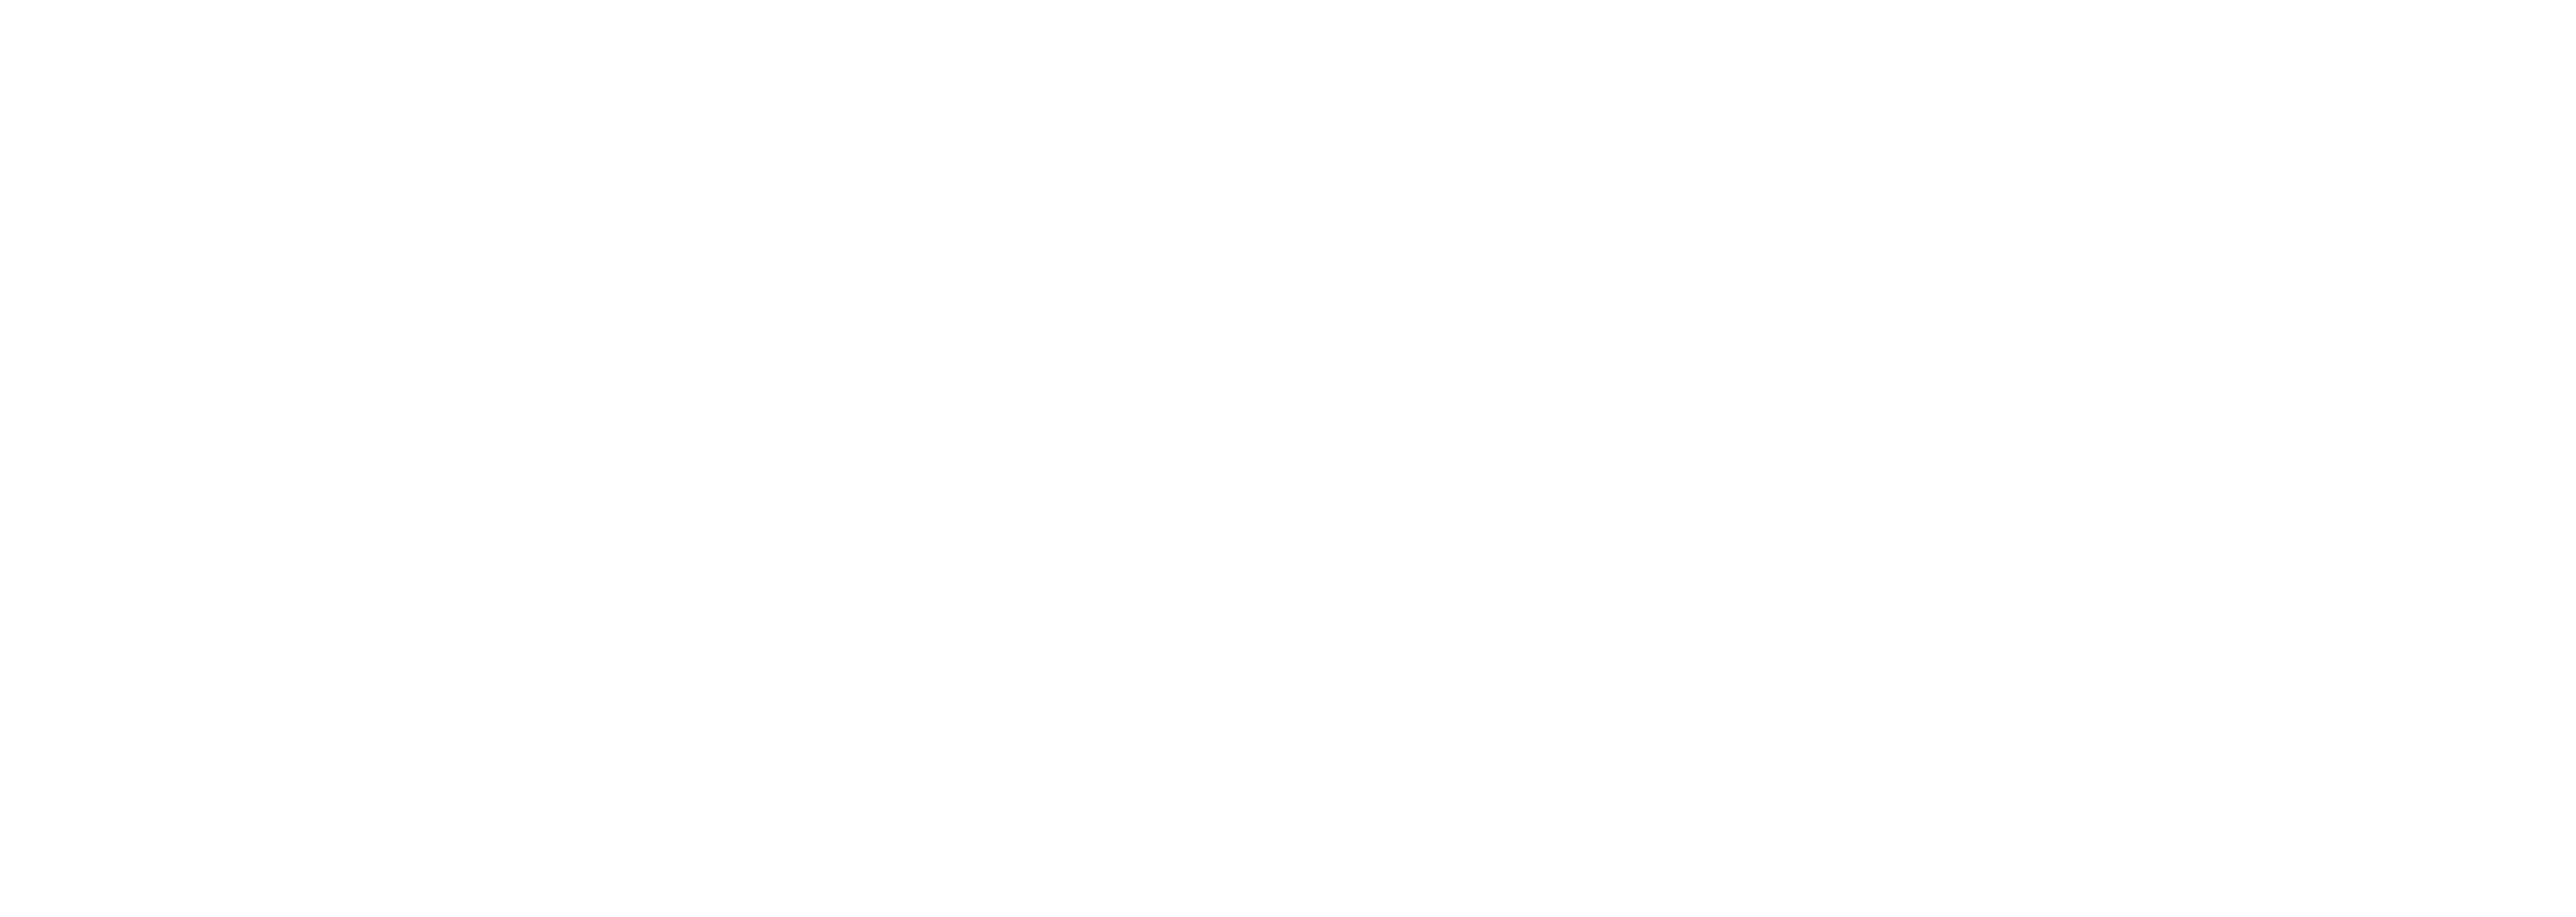 FemmePrive.me